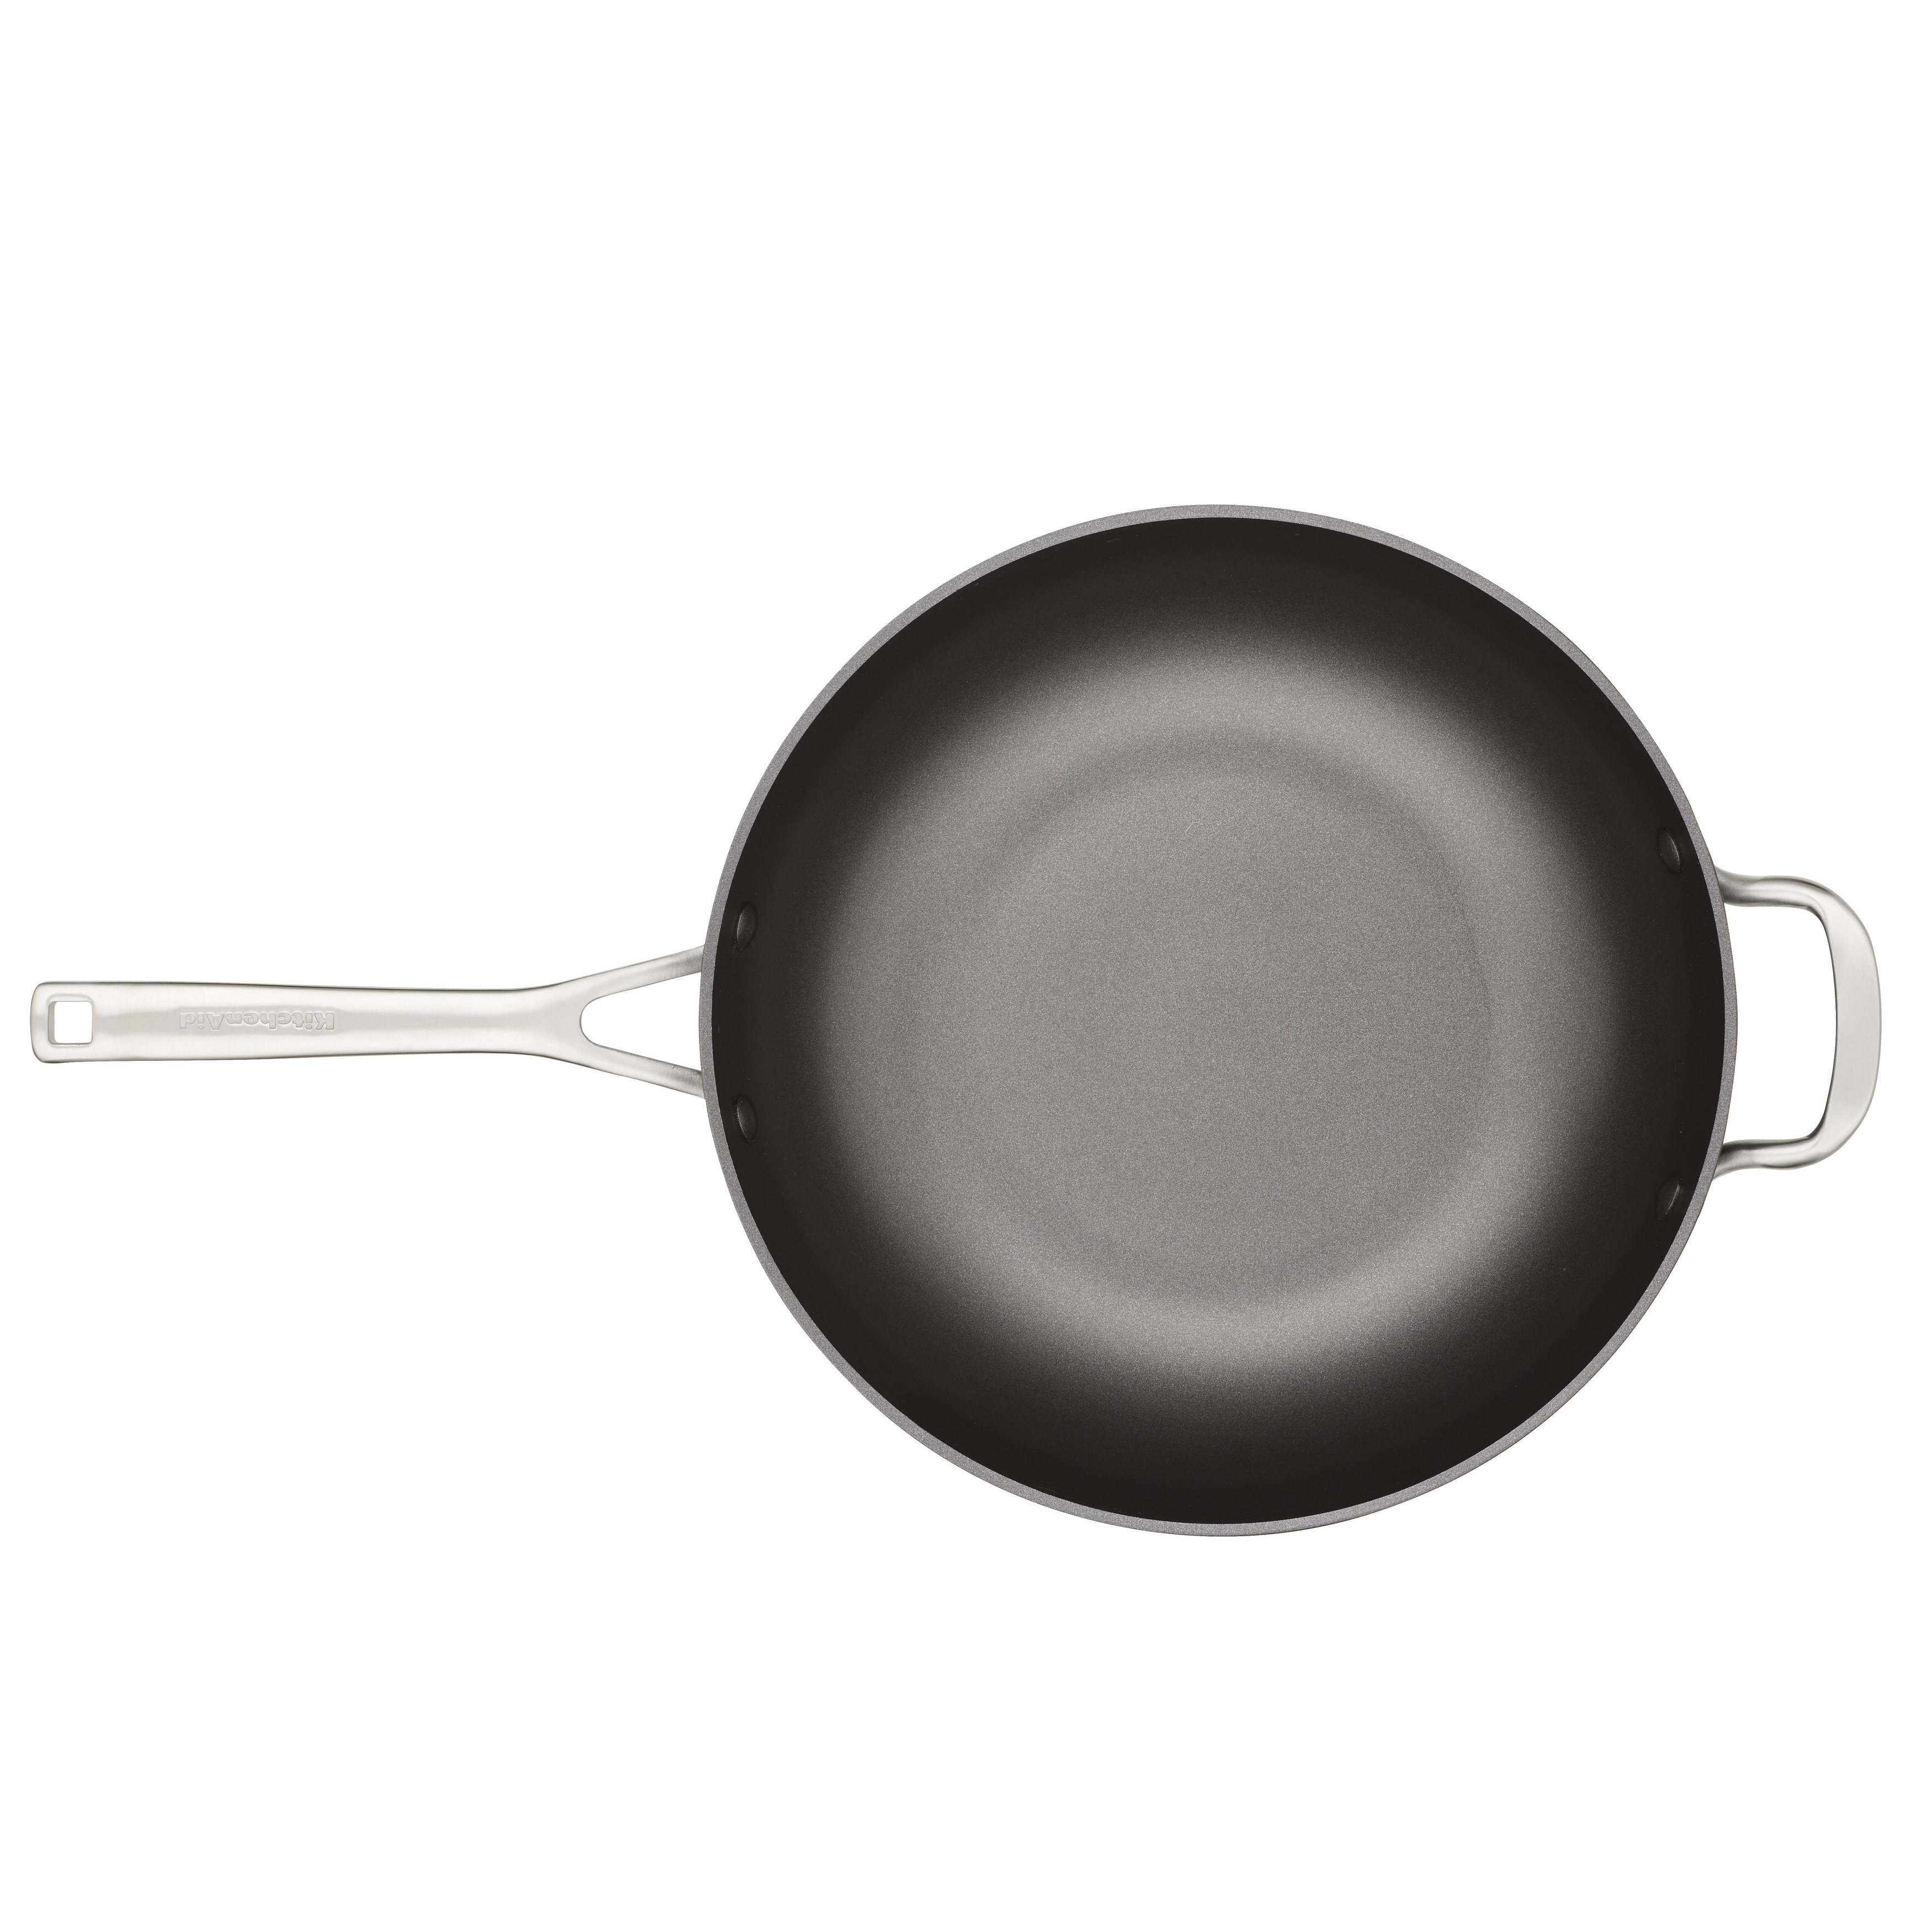 Circulon Symmetry Hard Anodized Nonstick Wok / Stir Fry Pan with Helper  Handle - 14 Inch, Red